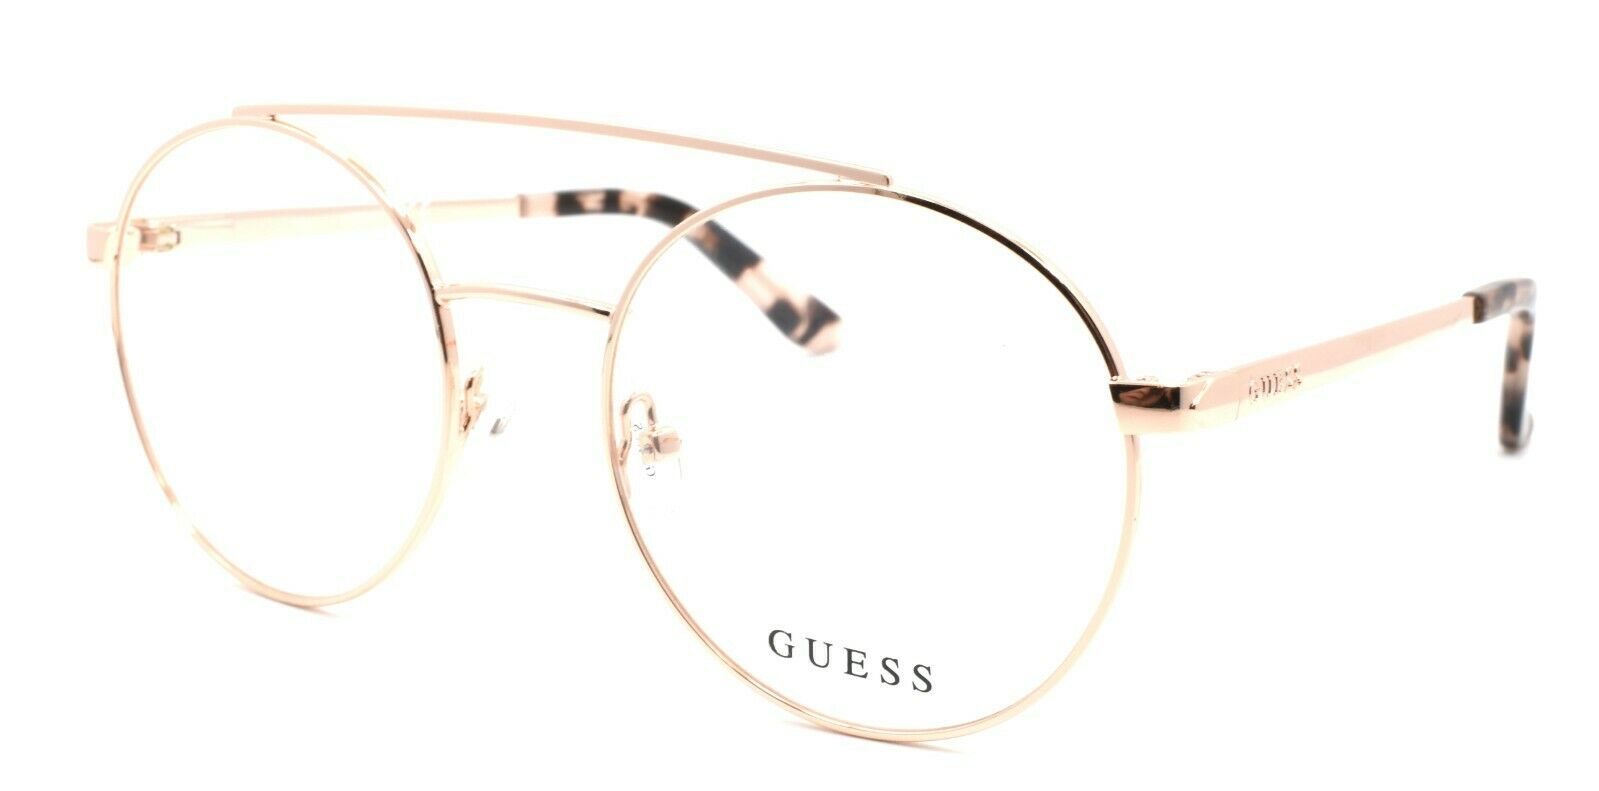 1-GUESS GU2714 028 Women's Eyeglasses Frames Aviator 50-18-135 Shiny Rose Gold-889214025487-IKSpecs